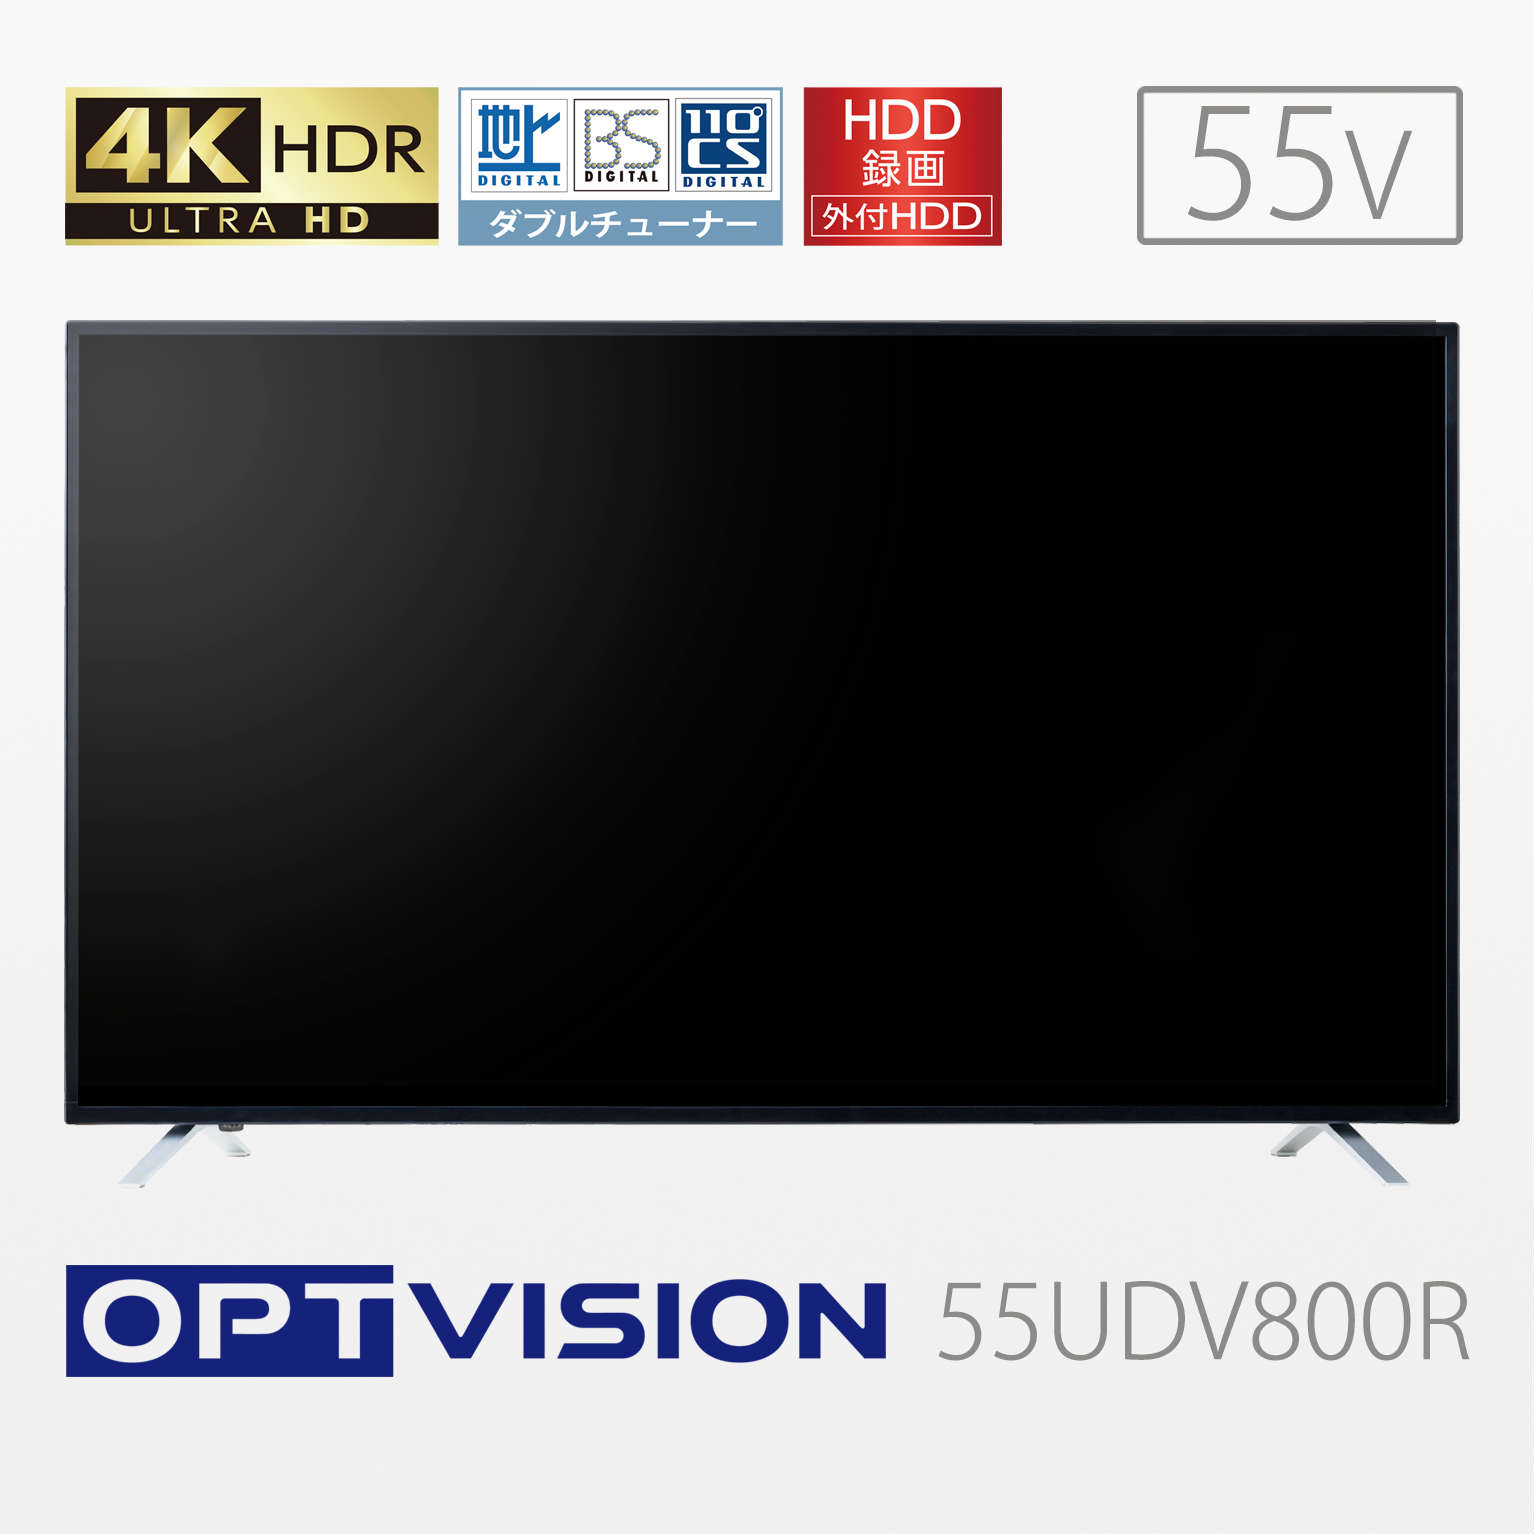 'OPTVISION 55v型 HDR対応4K液晶テレビ 55UDV800R（3年間延長保証なし設置サービスなし）'